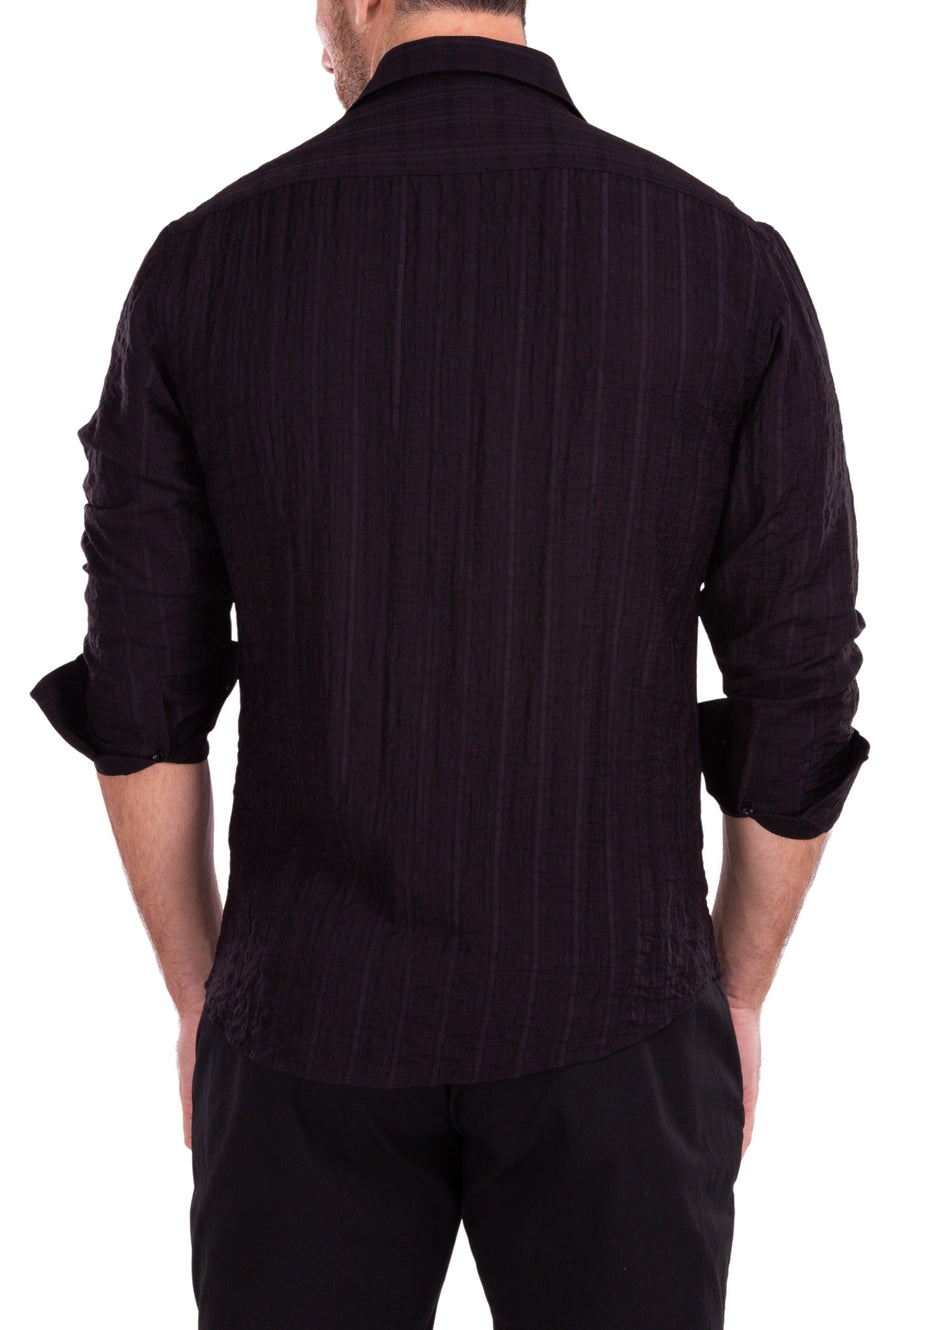 Linen Crinkle Texture Solid Black Button Up Long Sleeve Dress Shirt